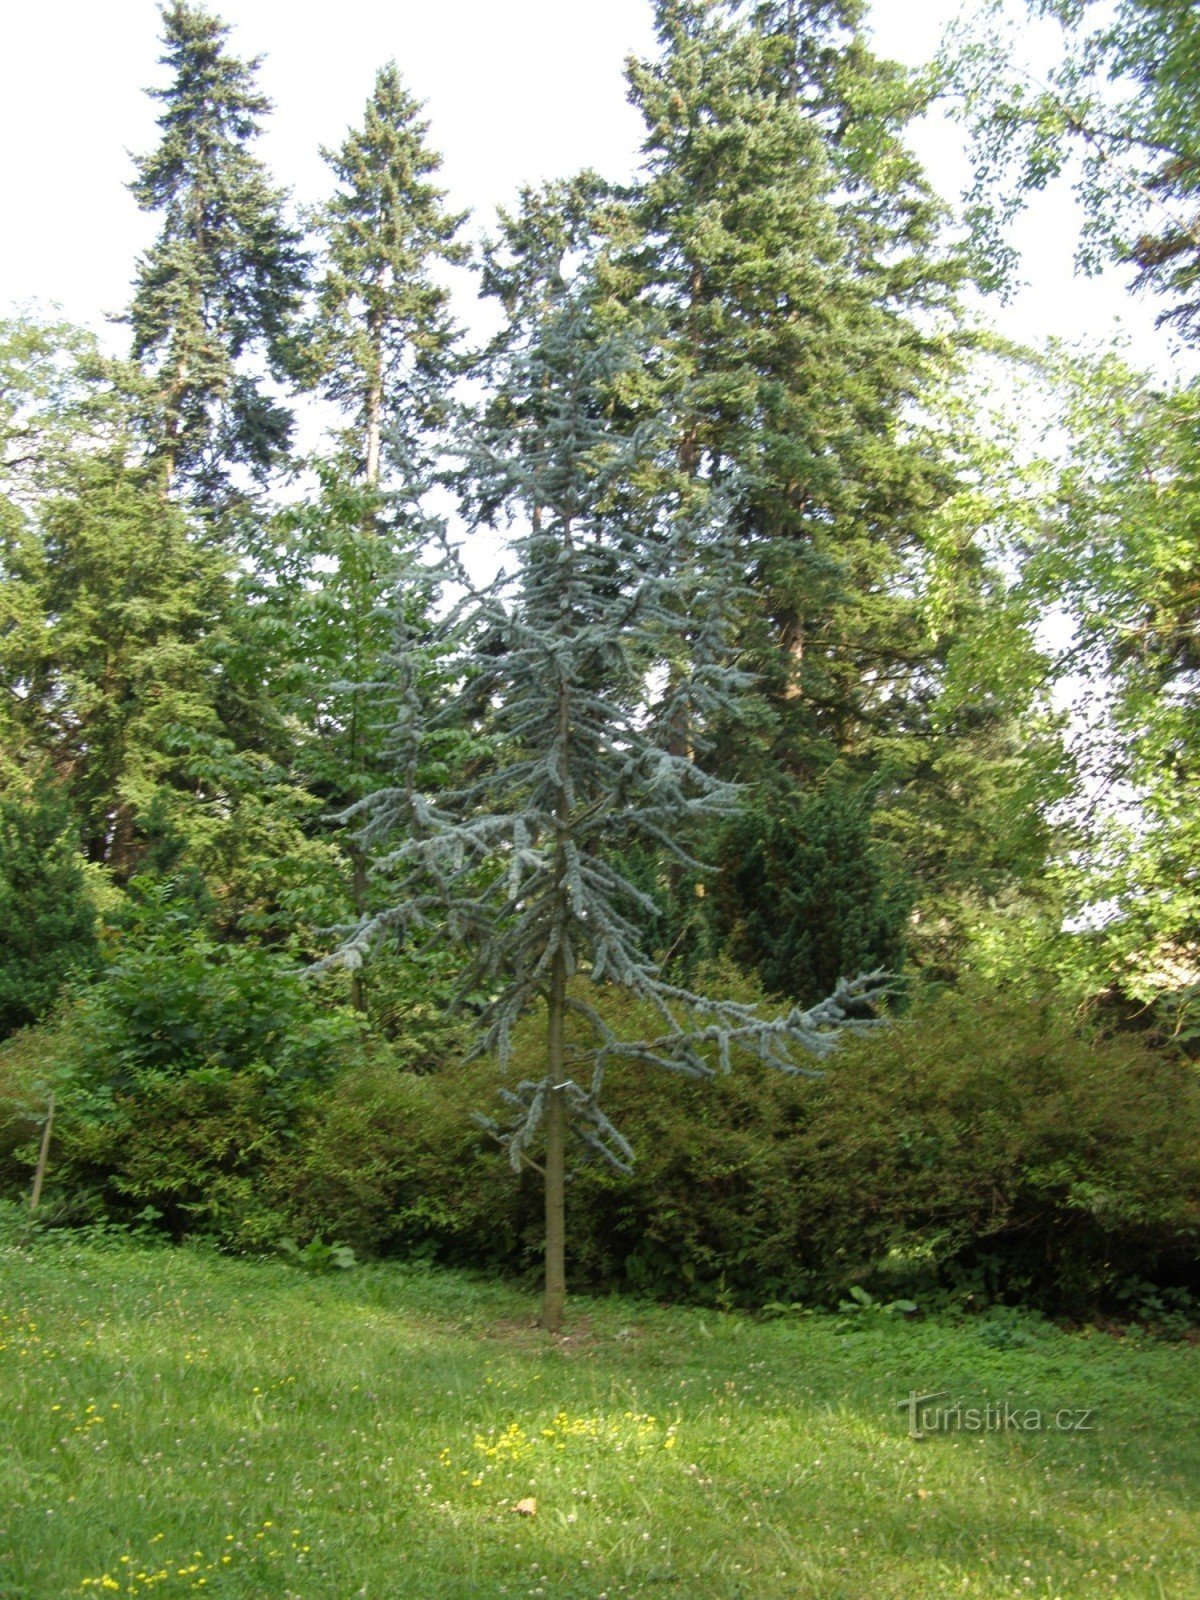 Arboretum Nový Dvůr kod Opave